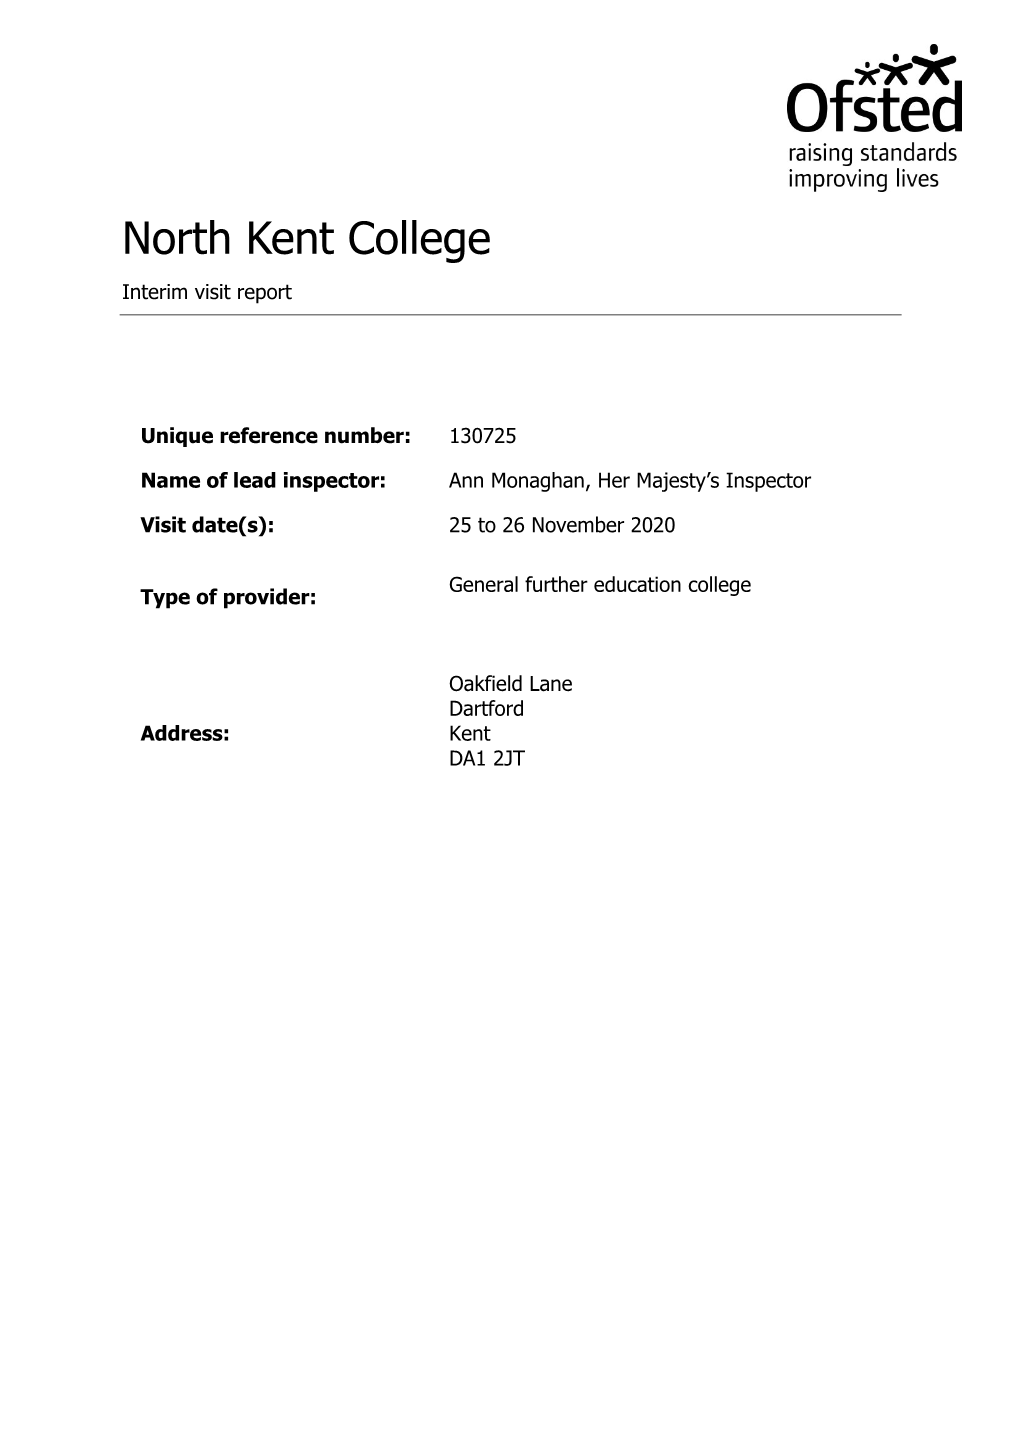 North Kent College Interim Visit Report